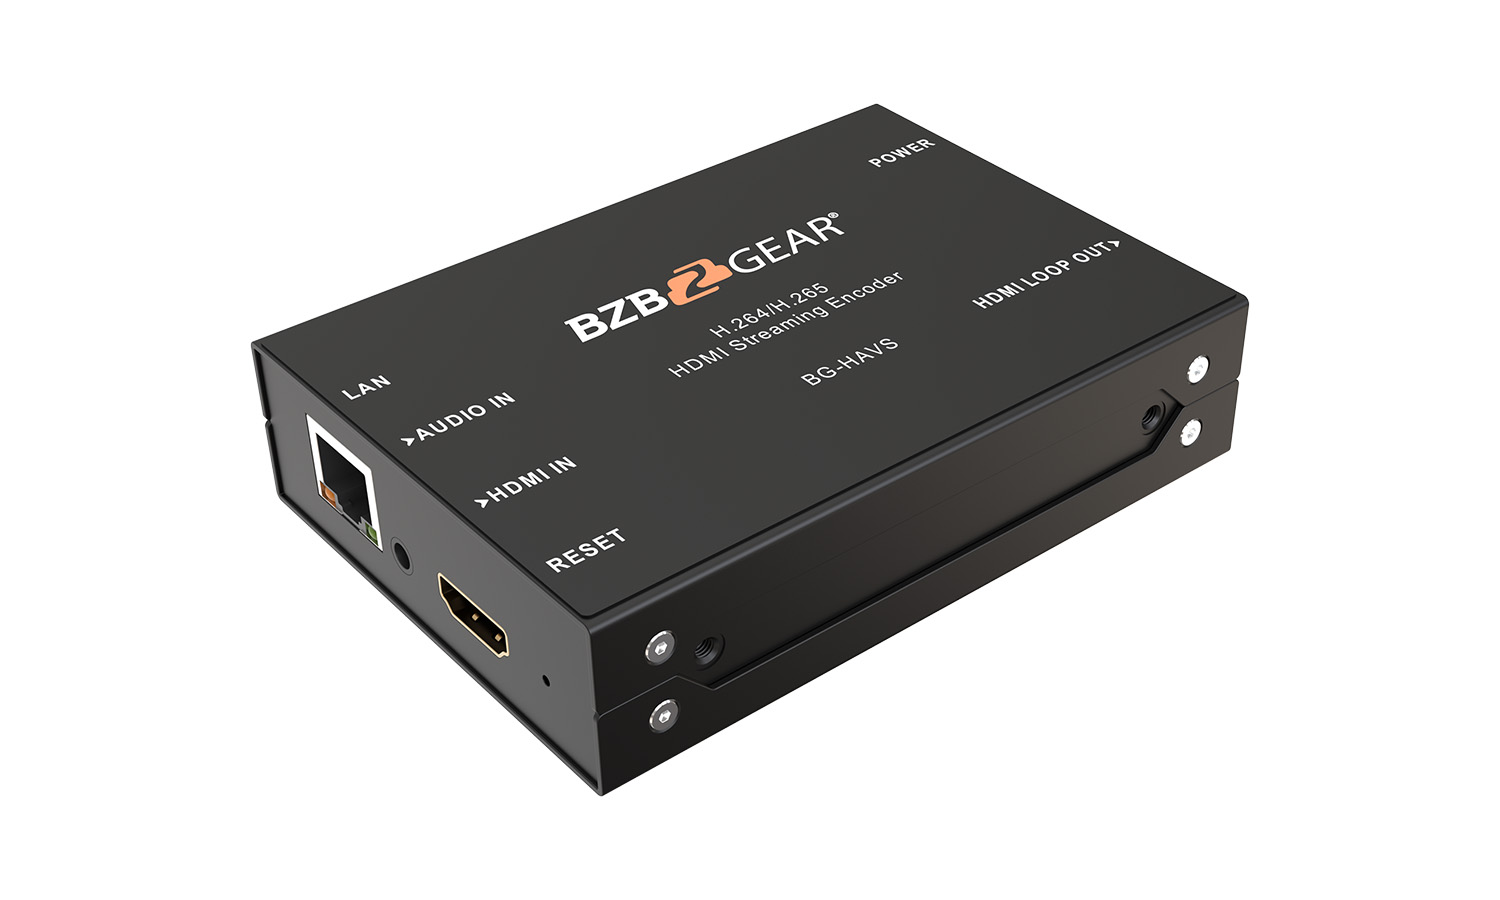 BG-HAVS 1080P H.264/265 HDMI Video and Audio Streaming Encoder by BZBGEAR